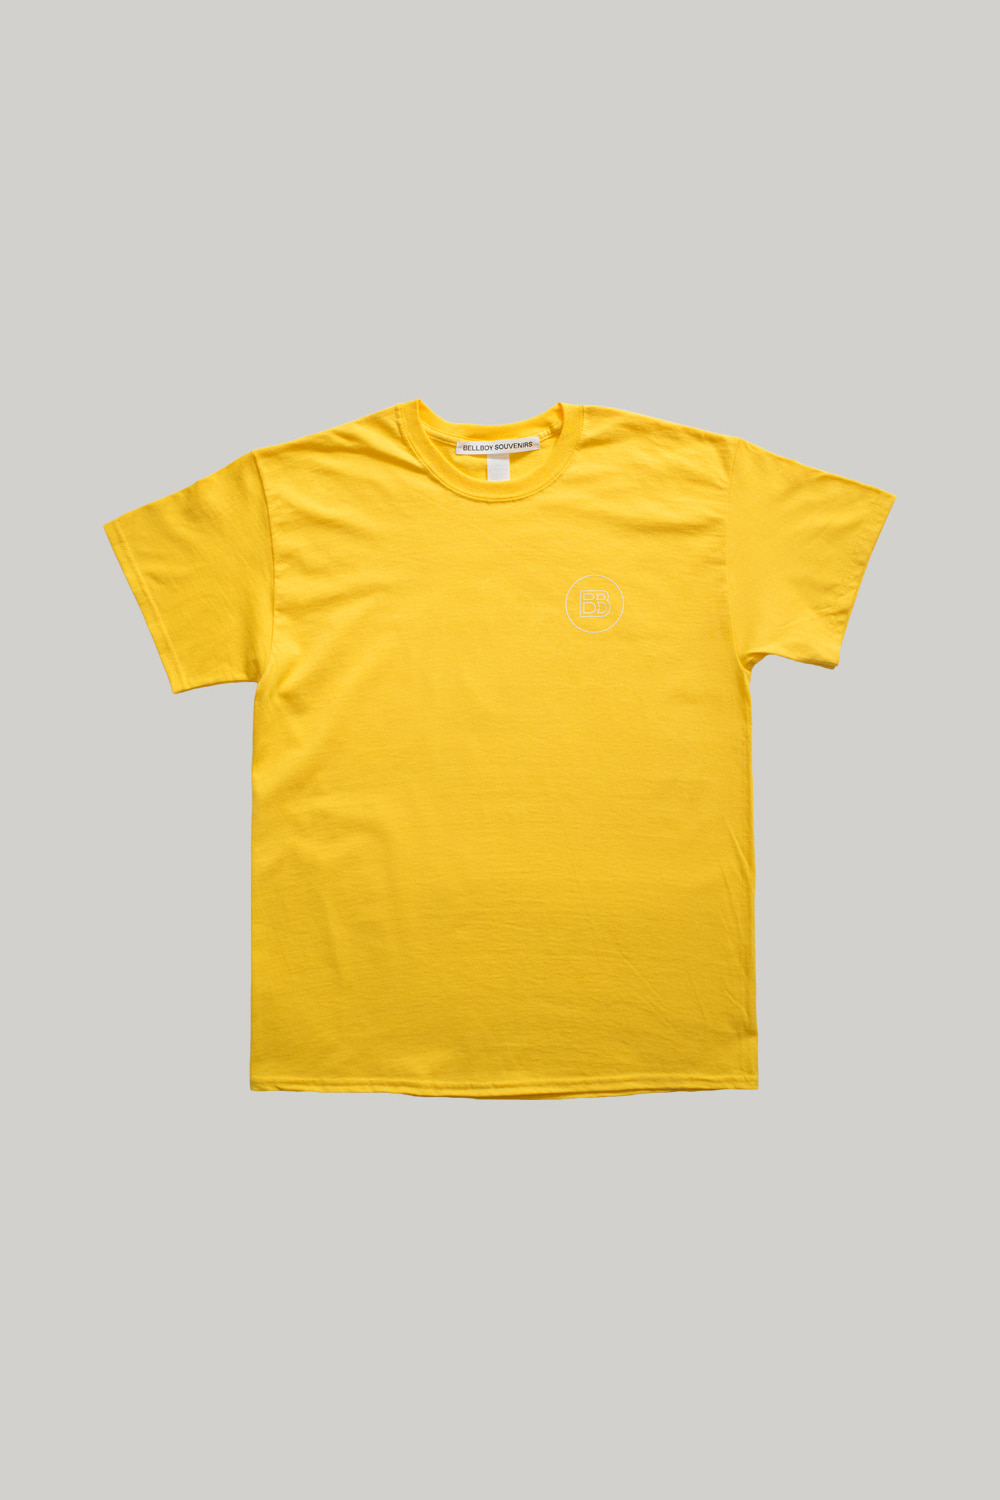 BB T-Shirts - Daisy 티셔츠, 워시드 헤비웨이트 티셔츠, 옥스포드셔츠, 버튼다운셔츠, 메신저백, 캔버스백